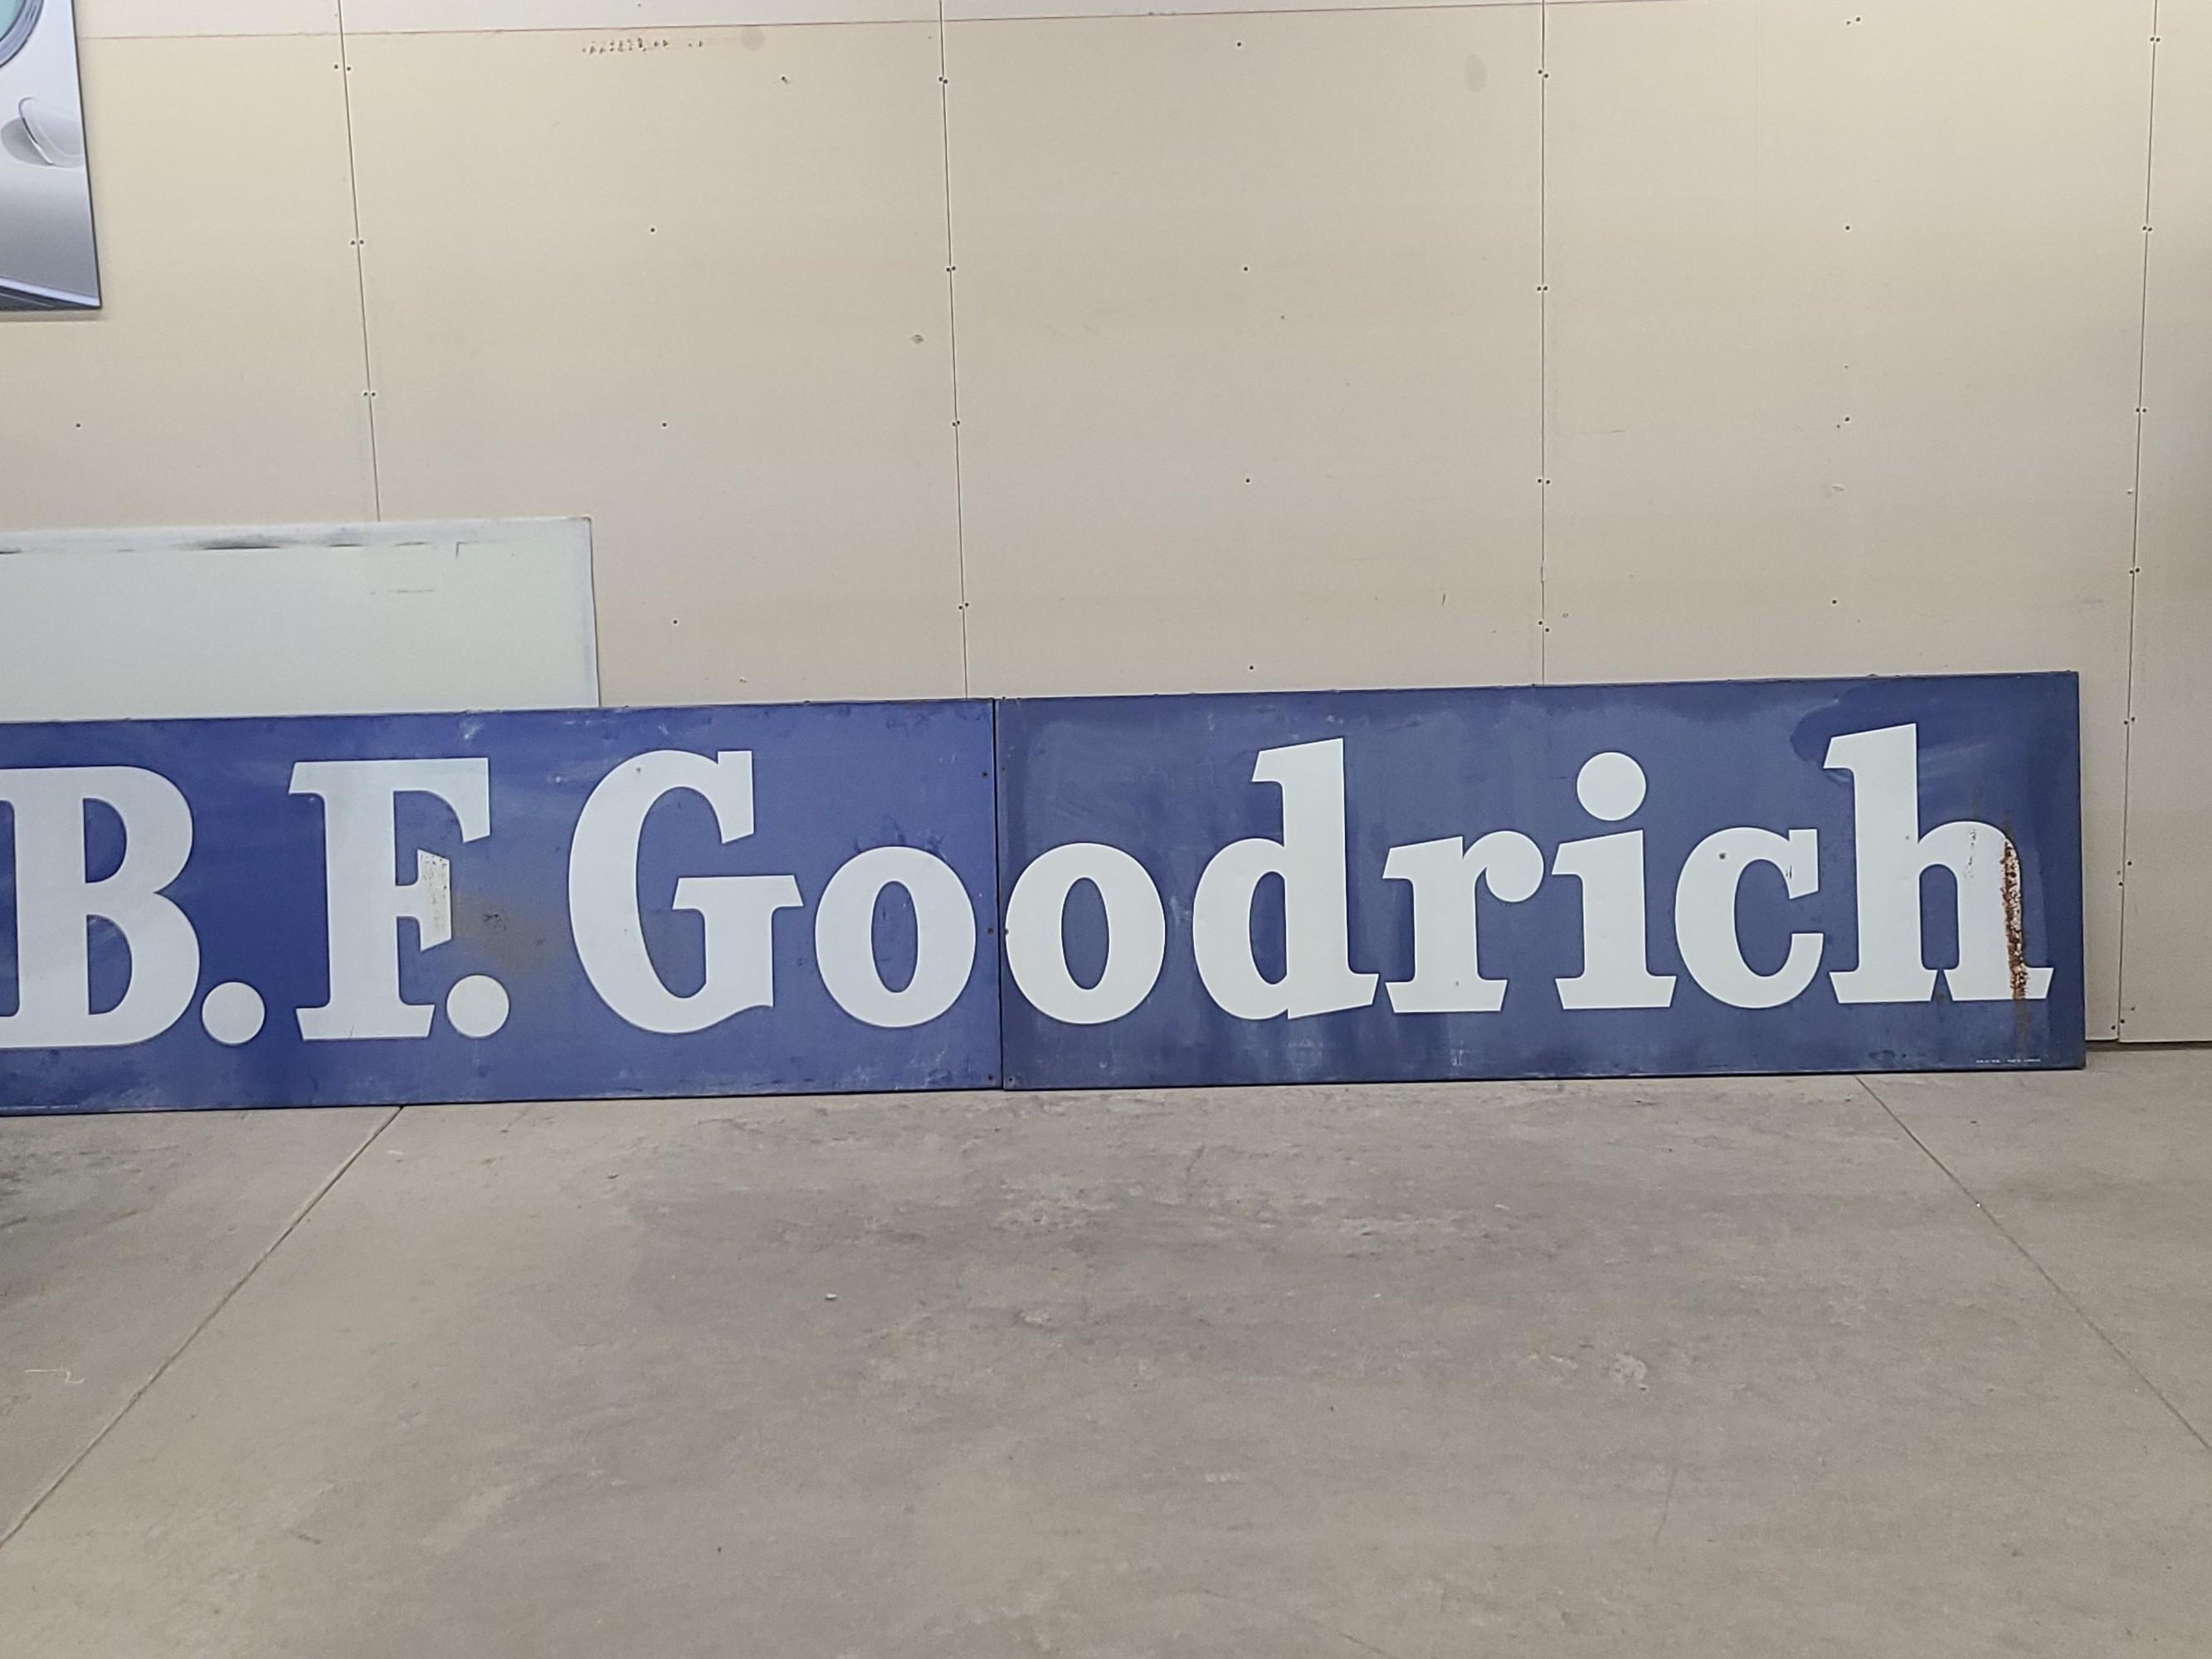 2 PC 15 ft Goodrich Sign